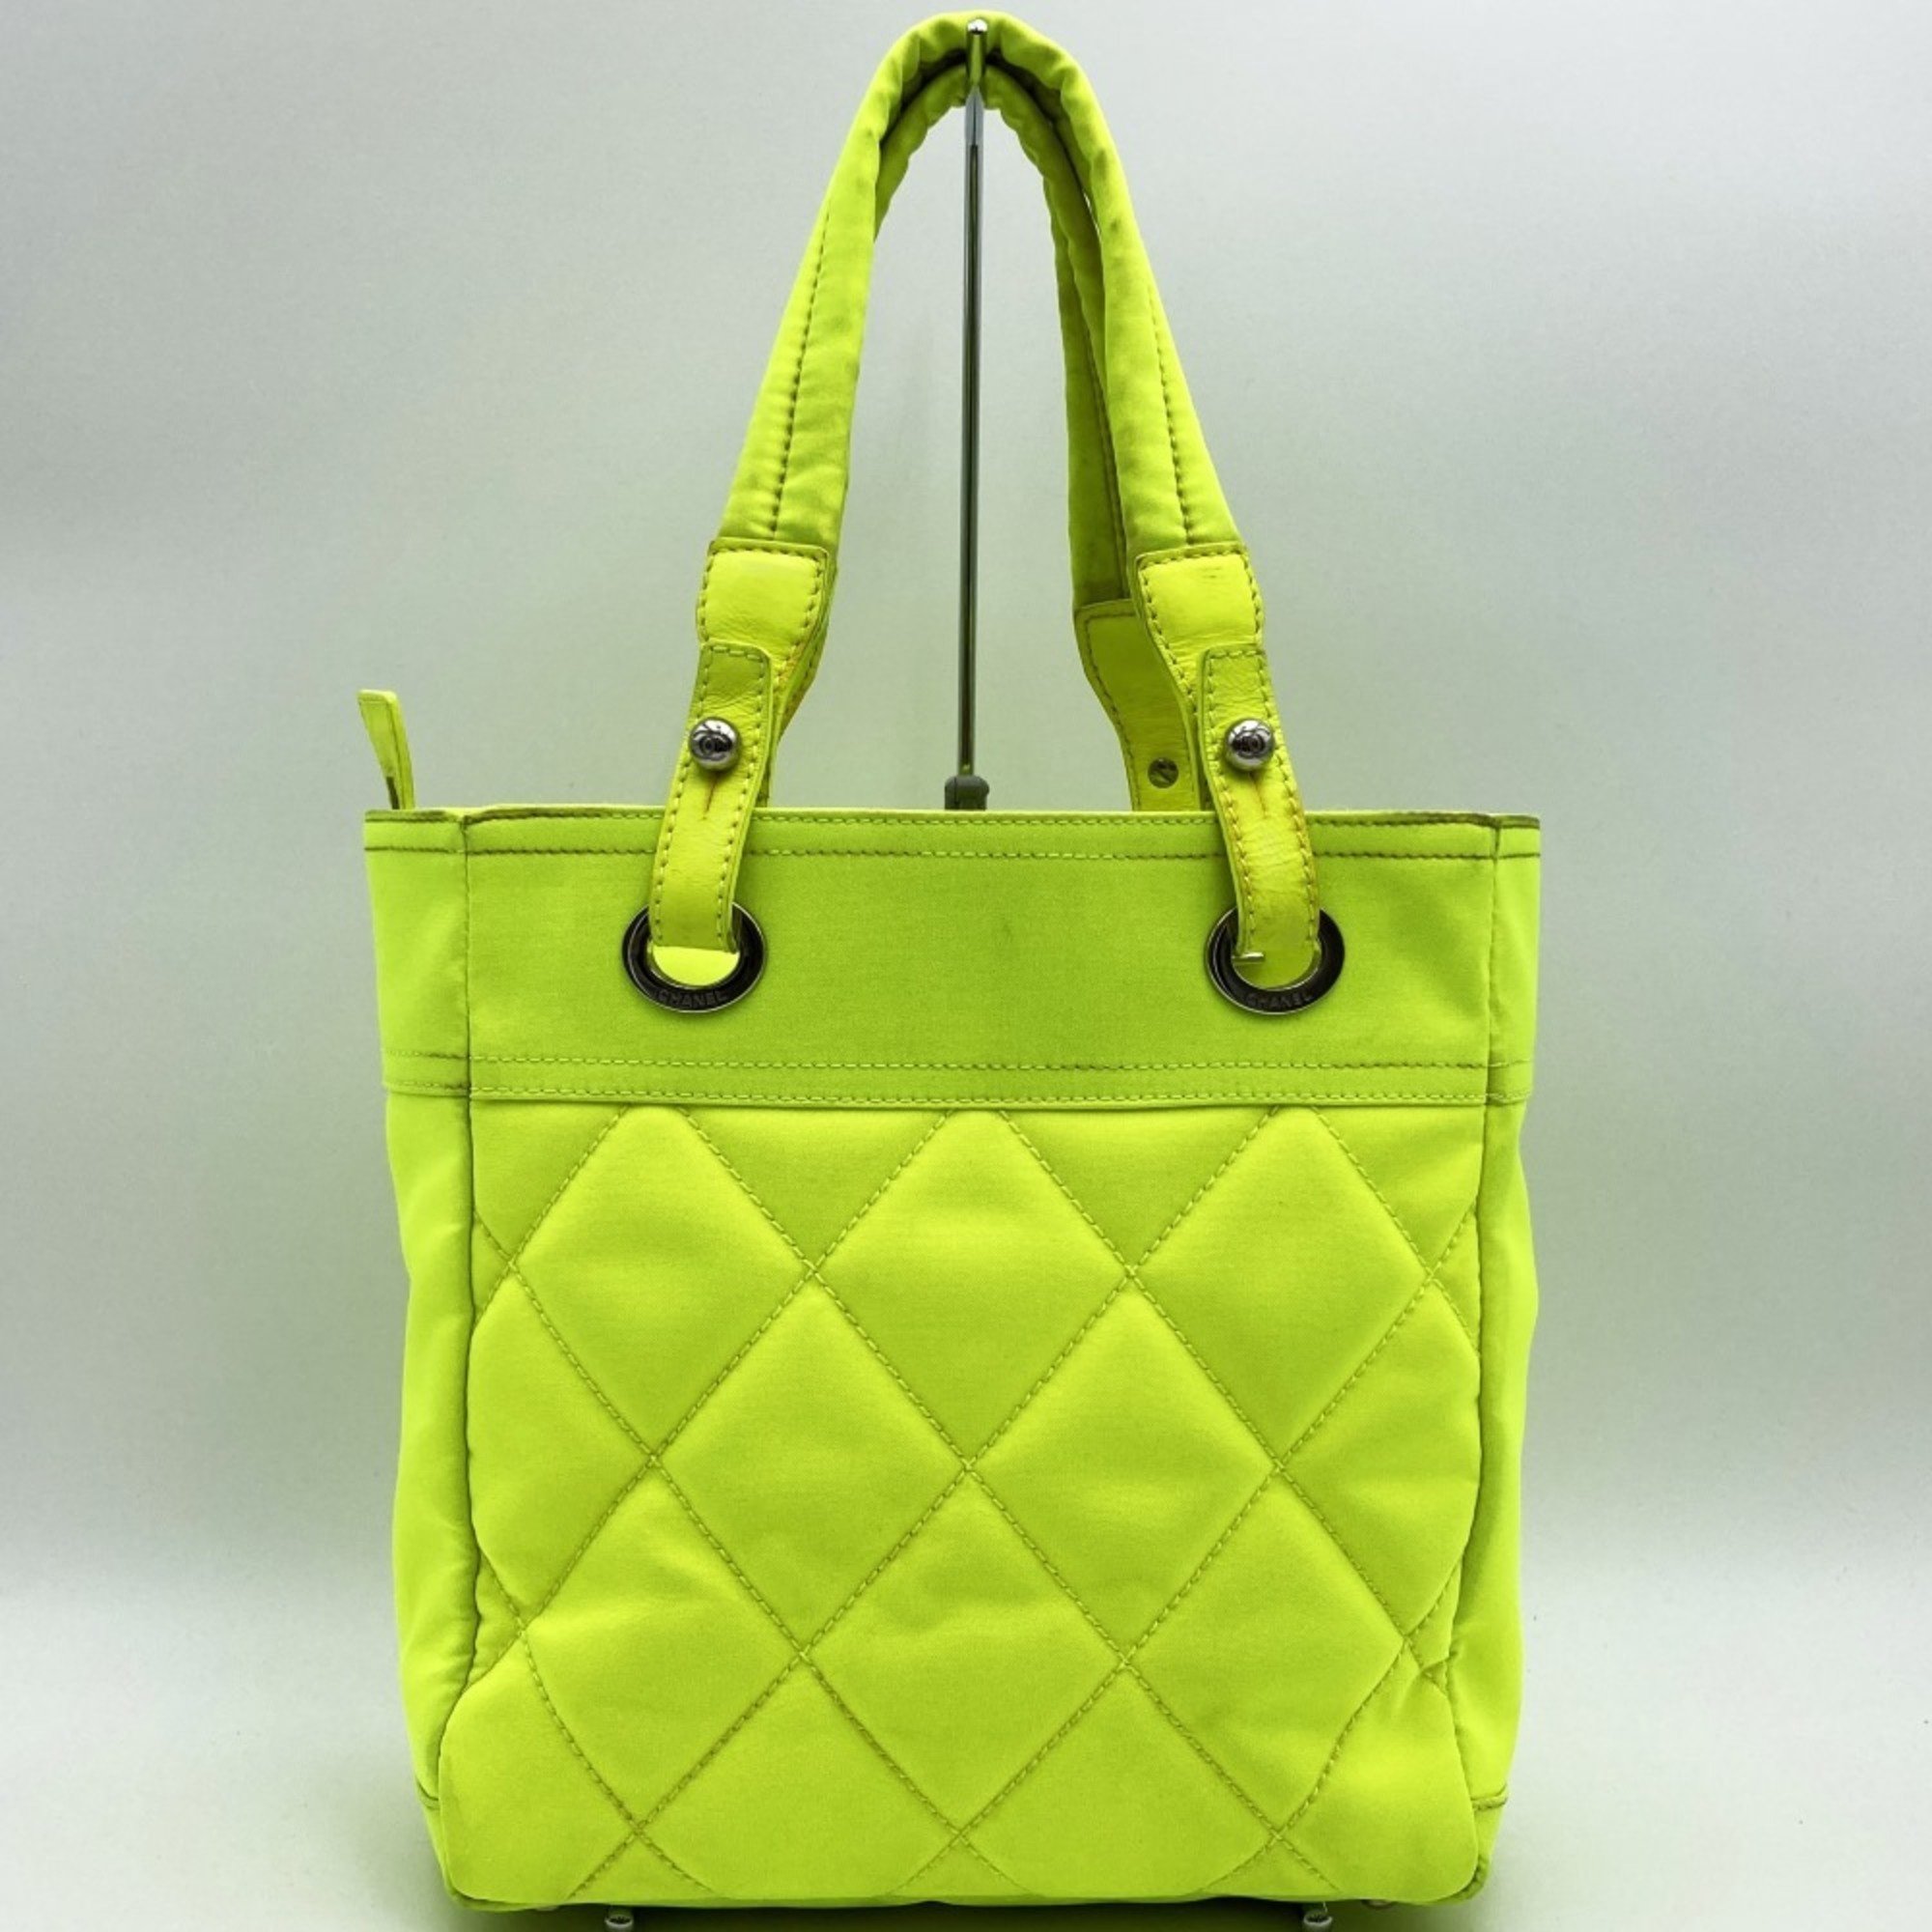 Chanel Handbag Tote Bag Paris Biarritz PM Neon Yellow Canvas Women's CHANEL